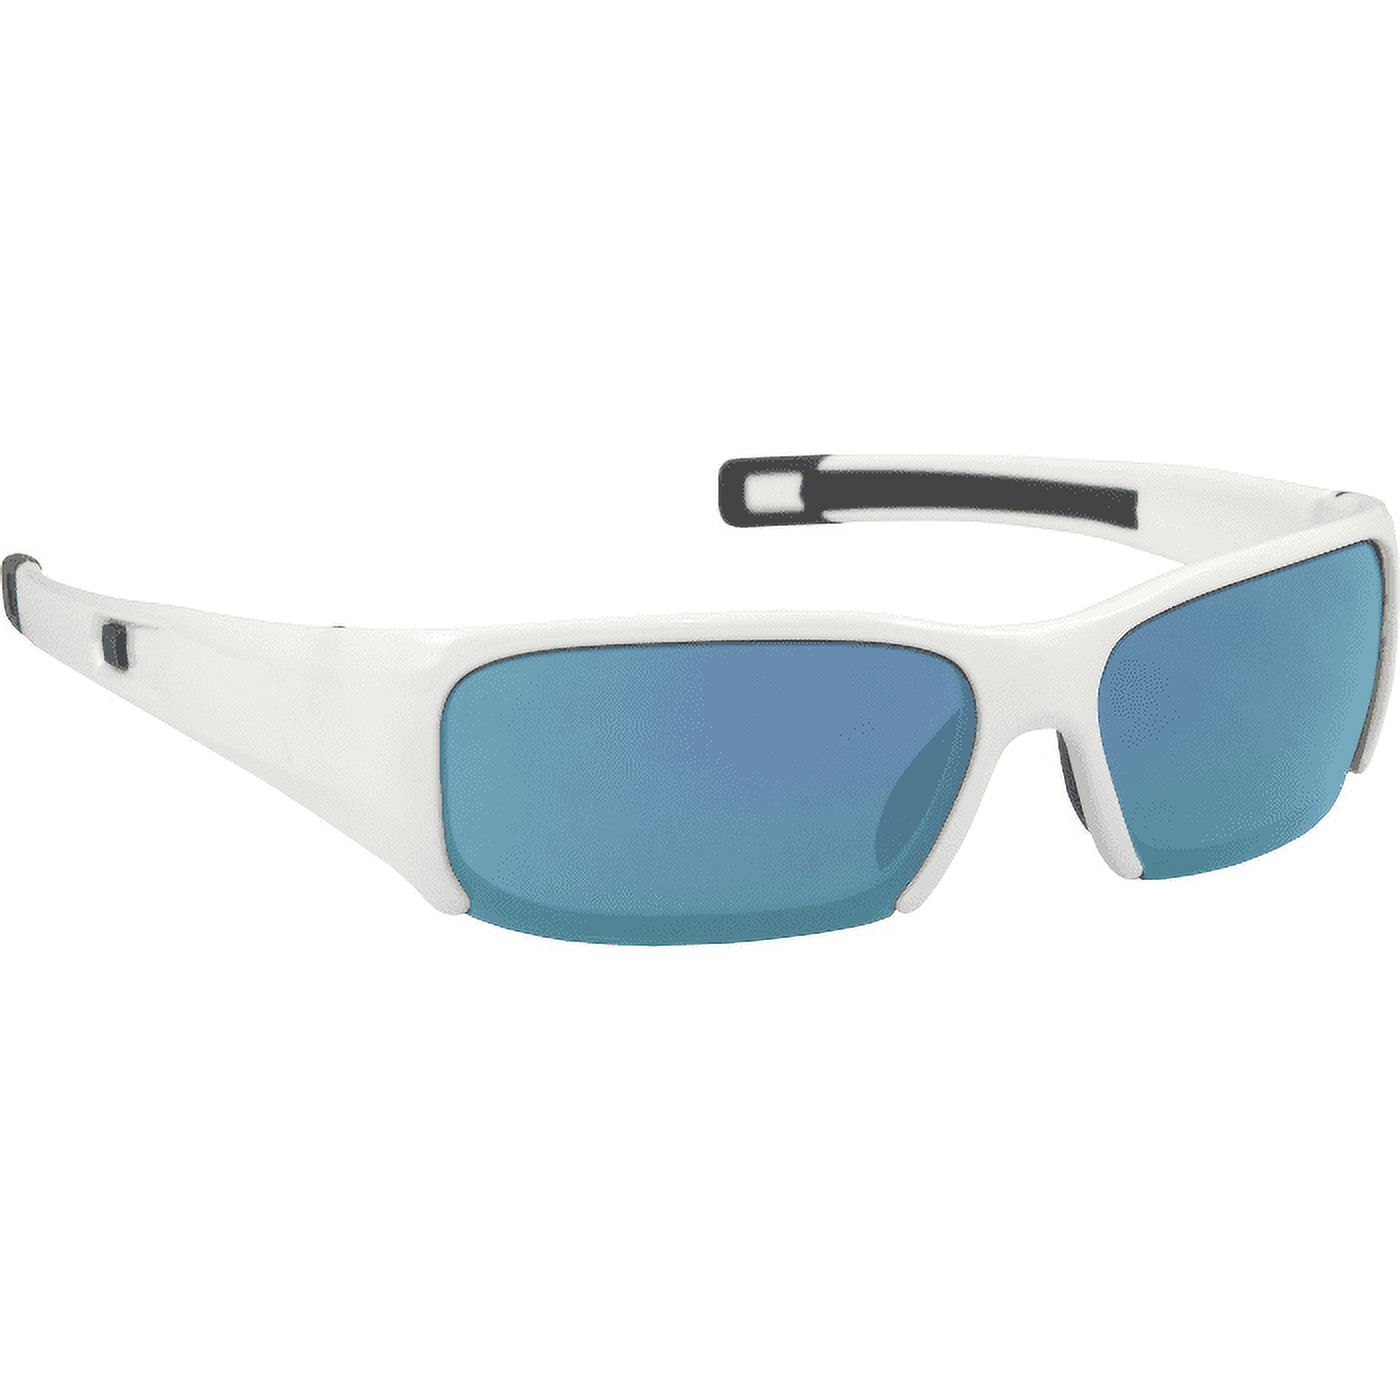 HS-8400 Sports Sunglasses - image 1 of 1